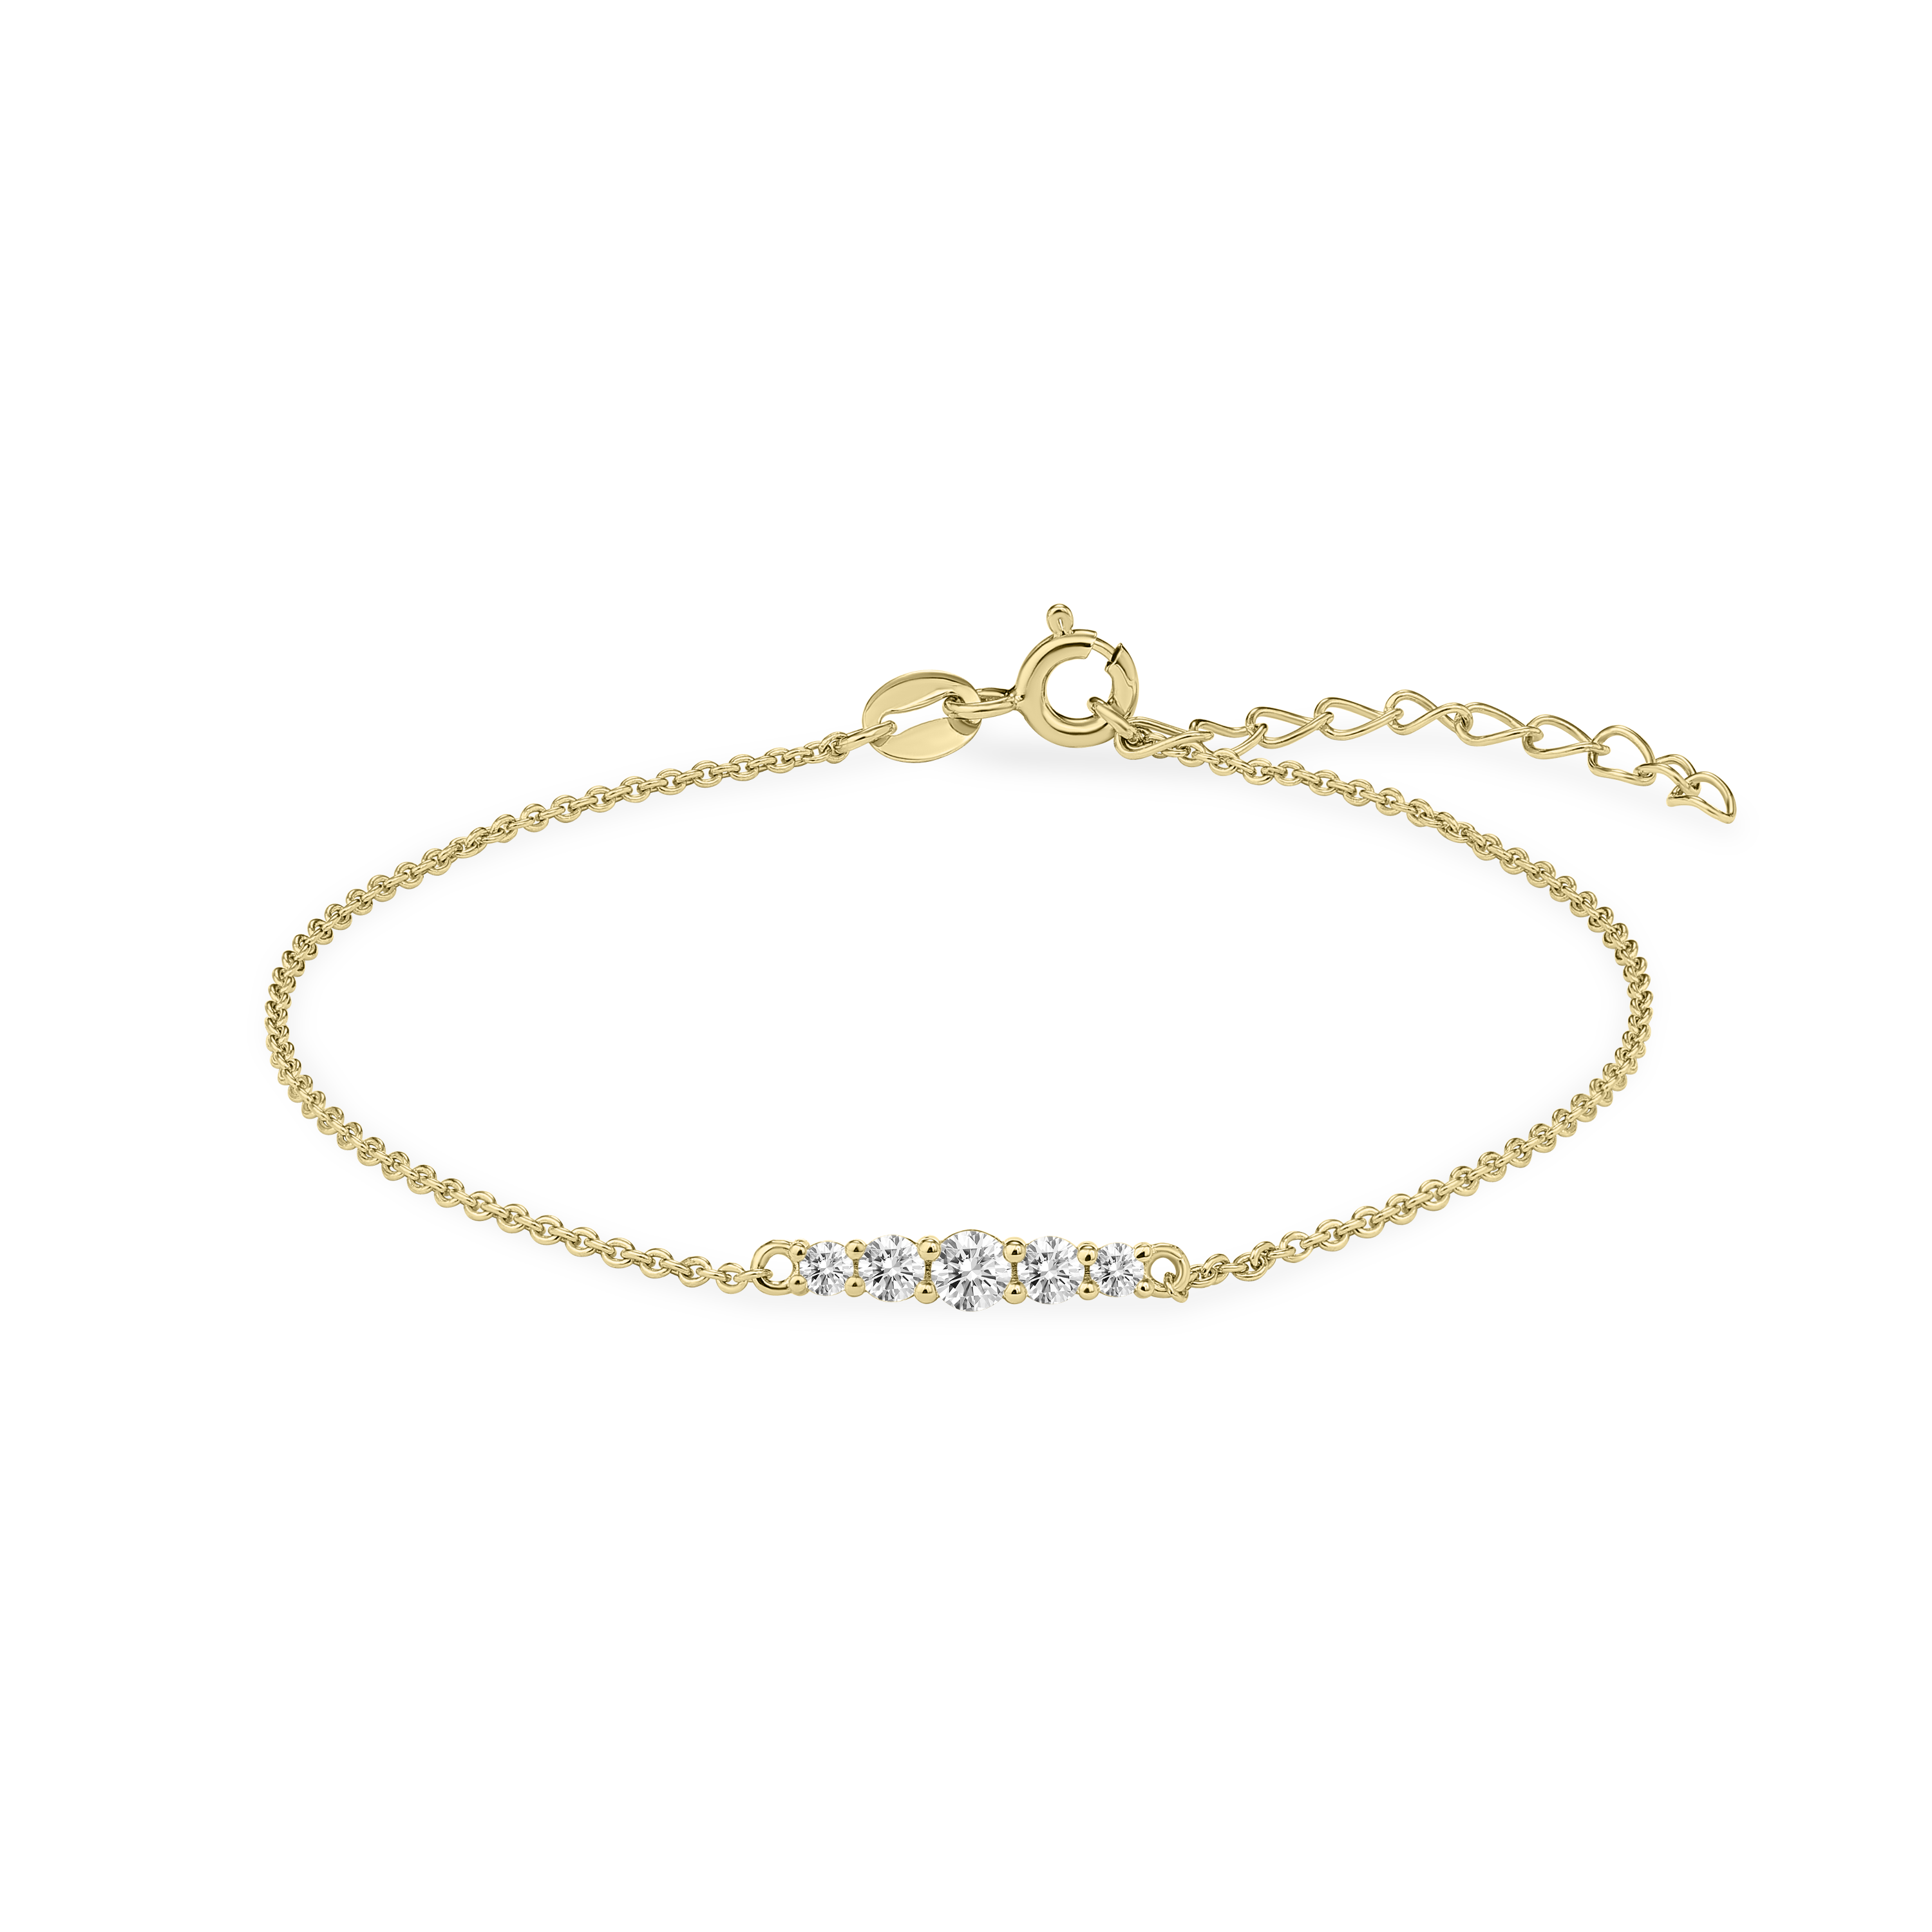 Gisser Jewels Gold Bracelet with Stones